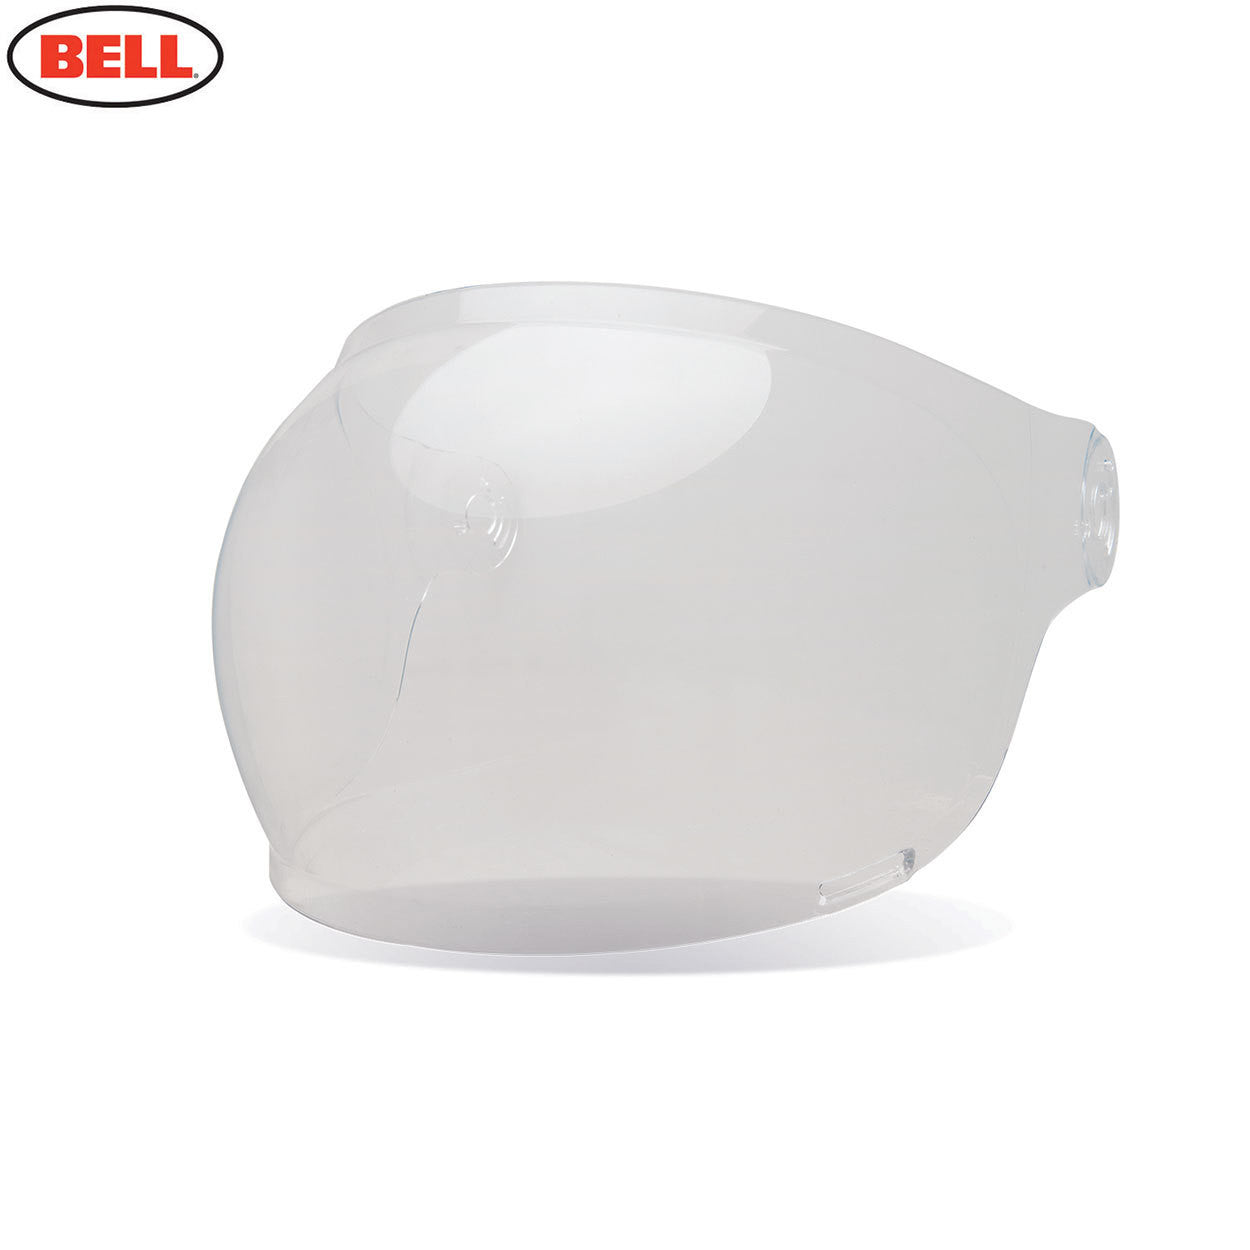 Bell Shield Bullitt Bubble, Brown Tab - Clear